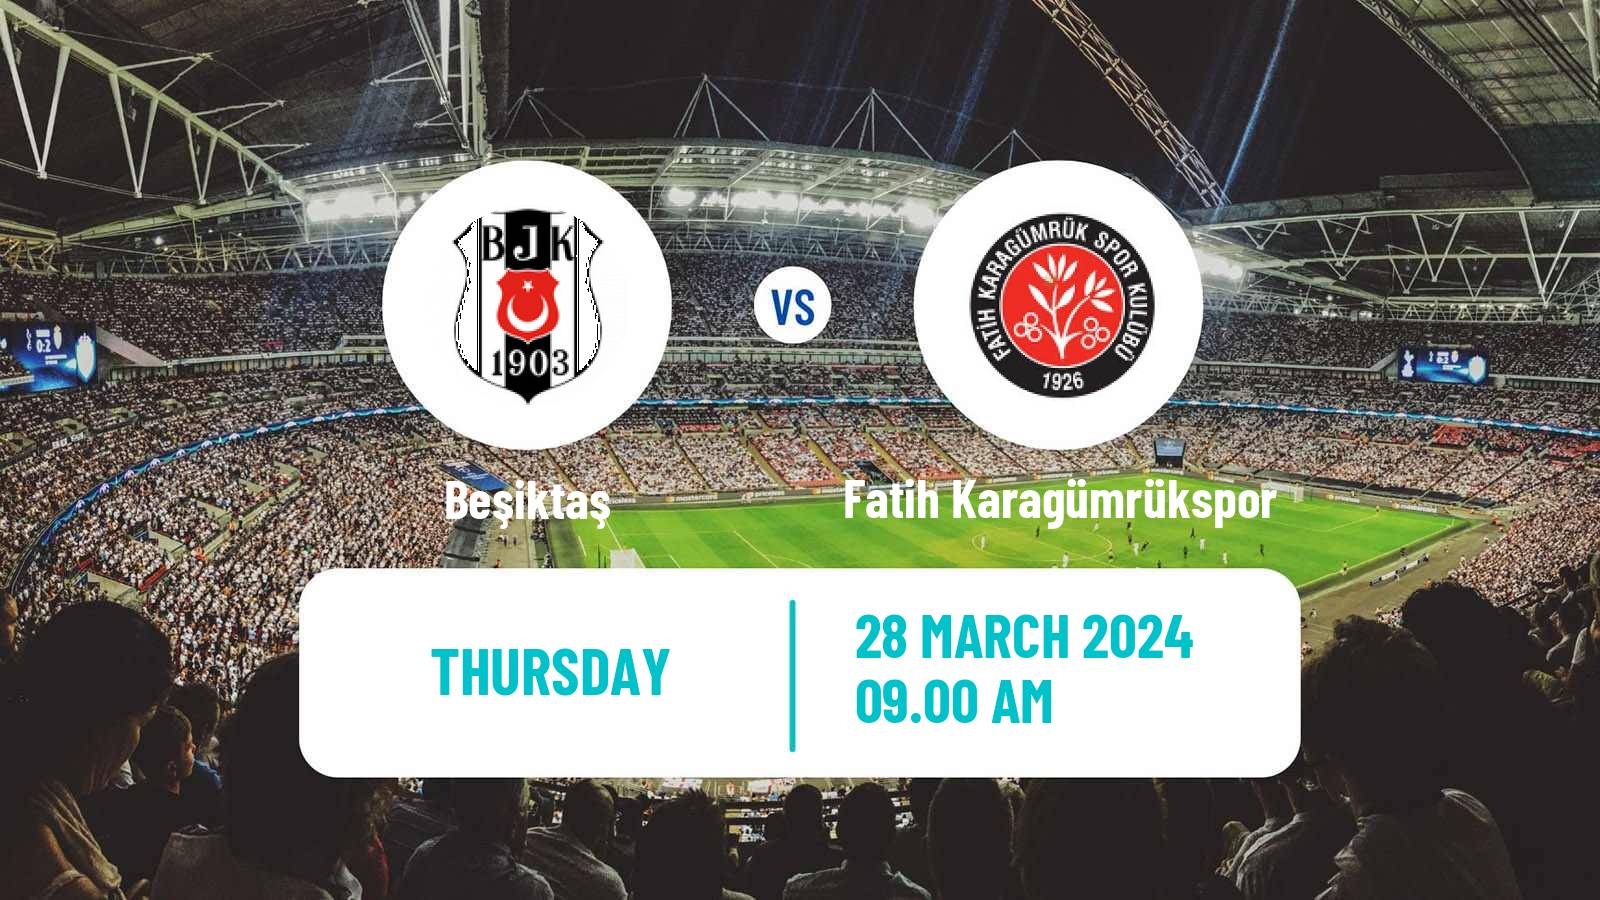 Soccer Club Friendly Beşiktaş - Fatih Karagümrükspor